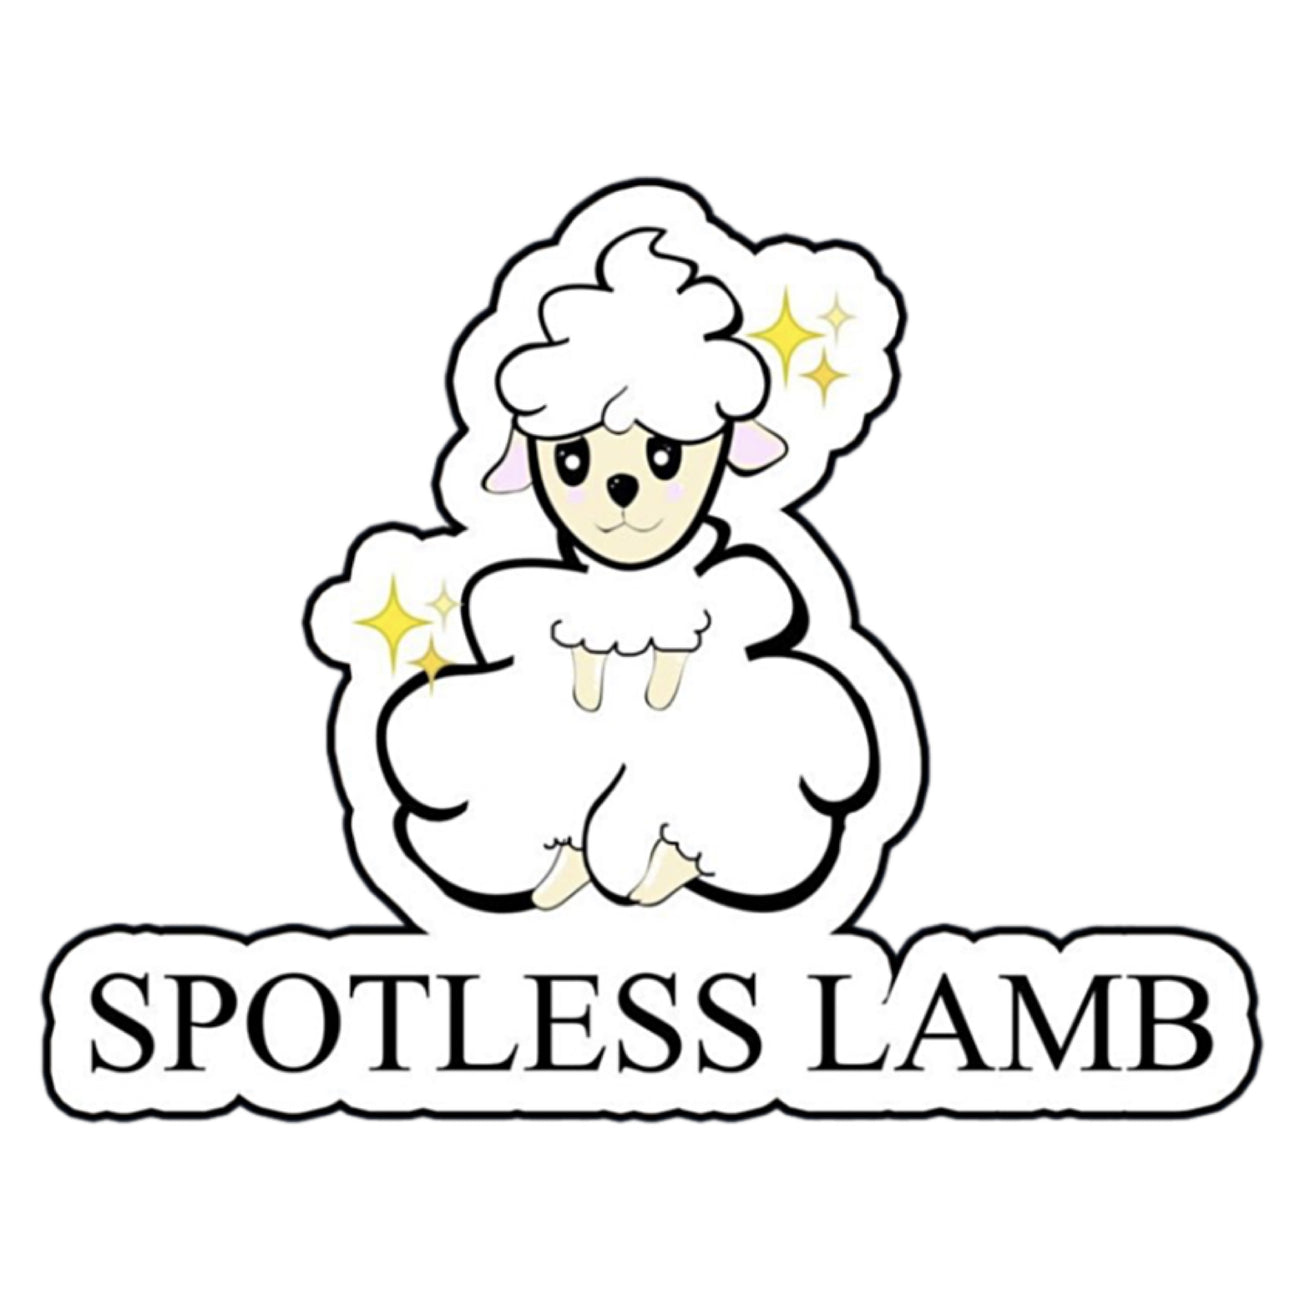 Spotless Lamb Brand